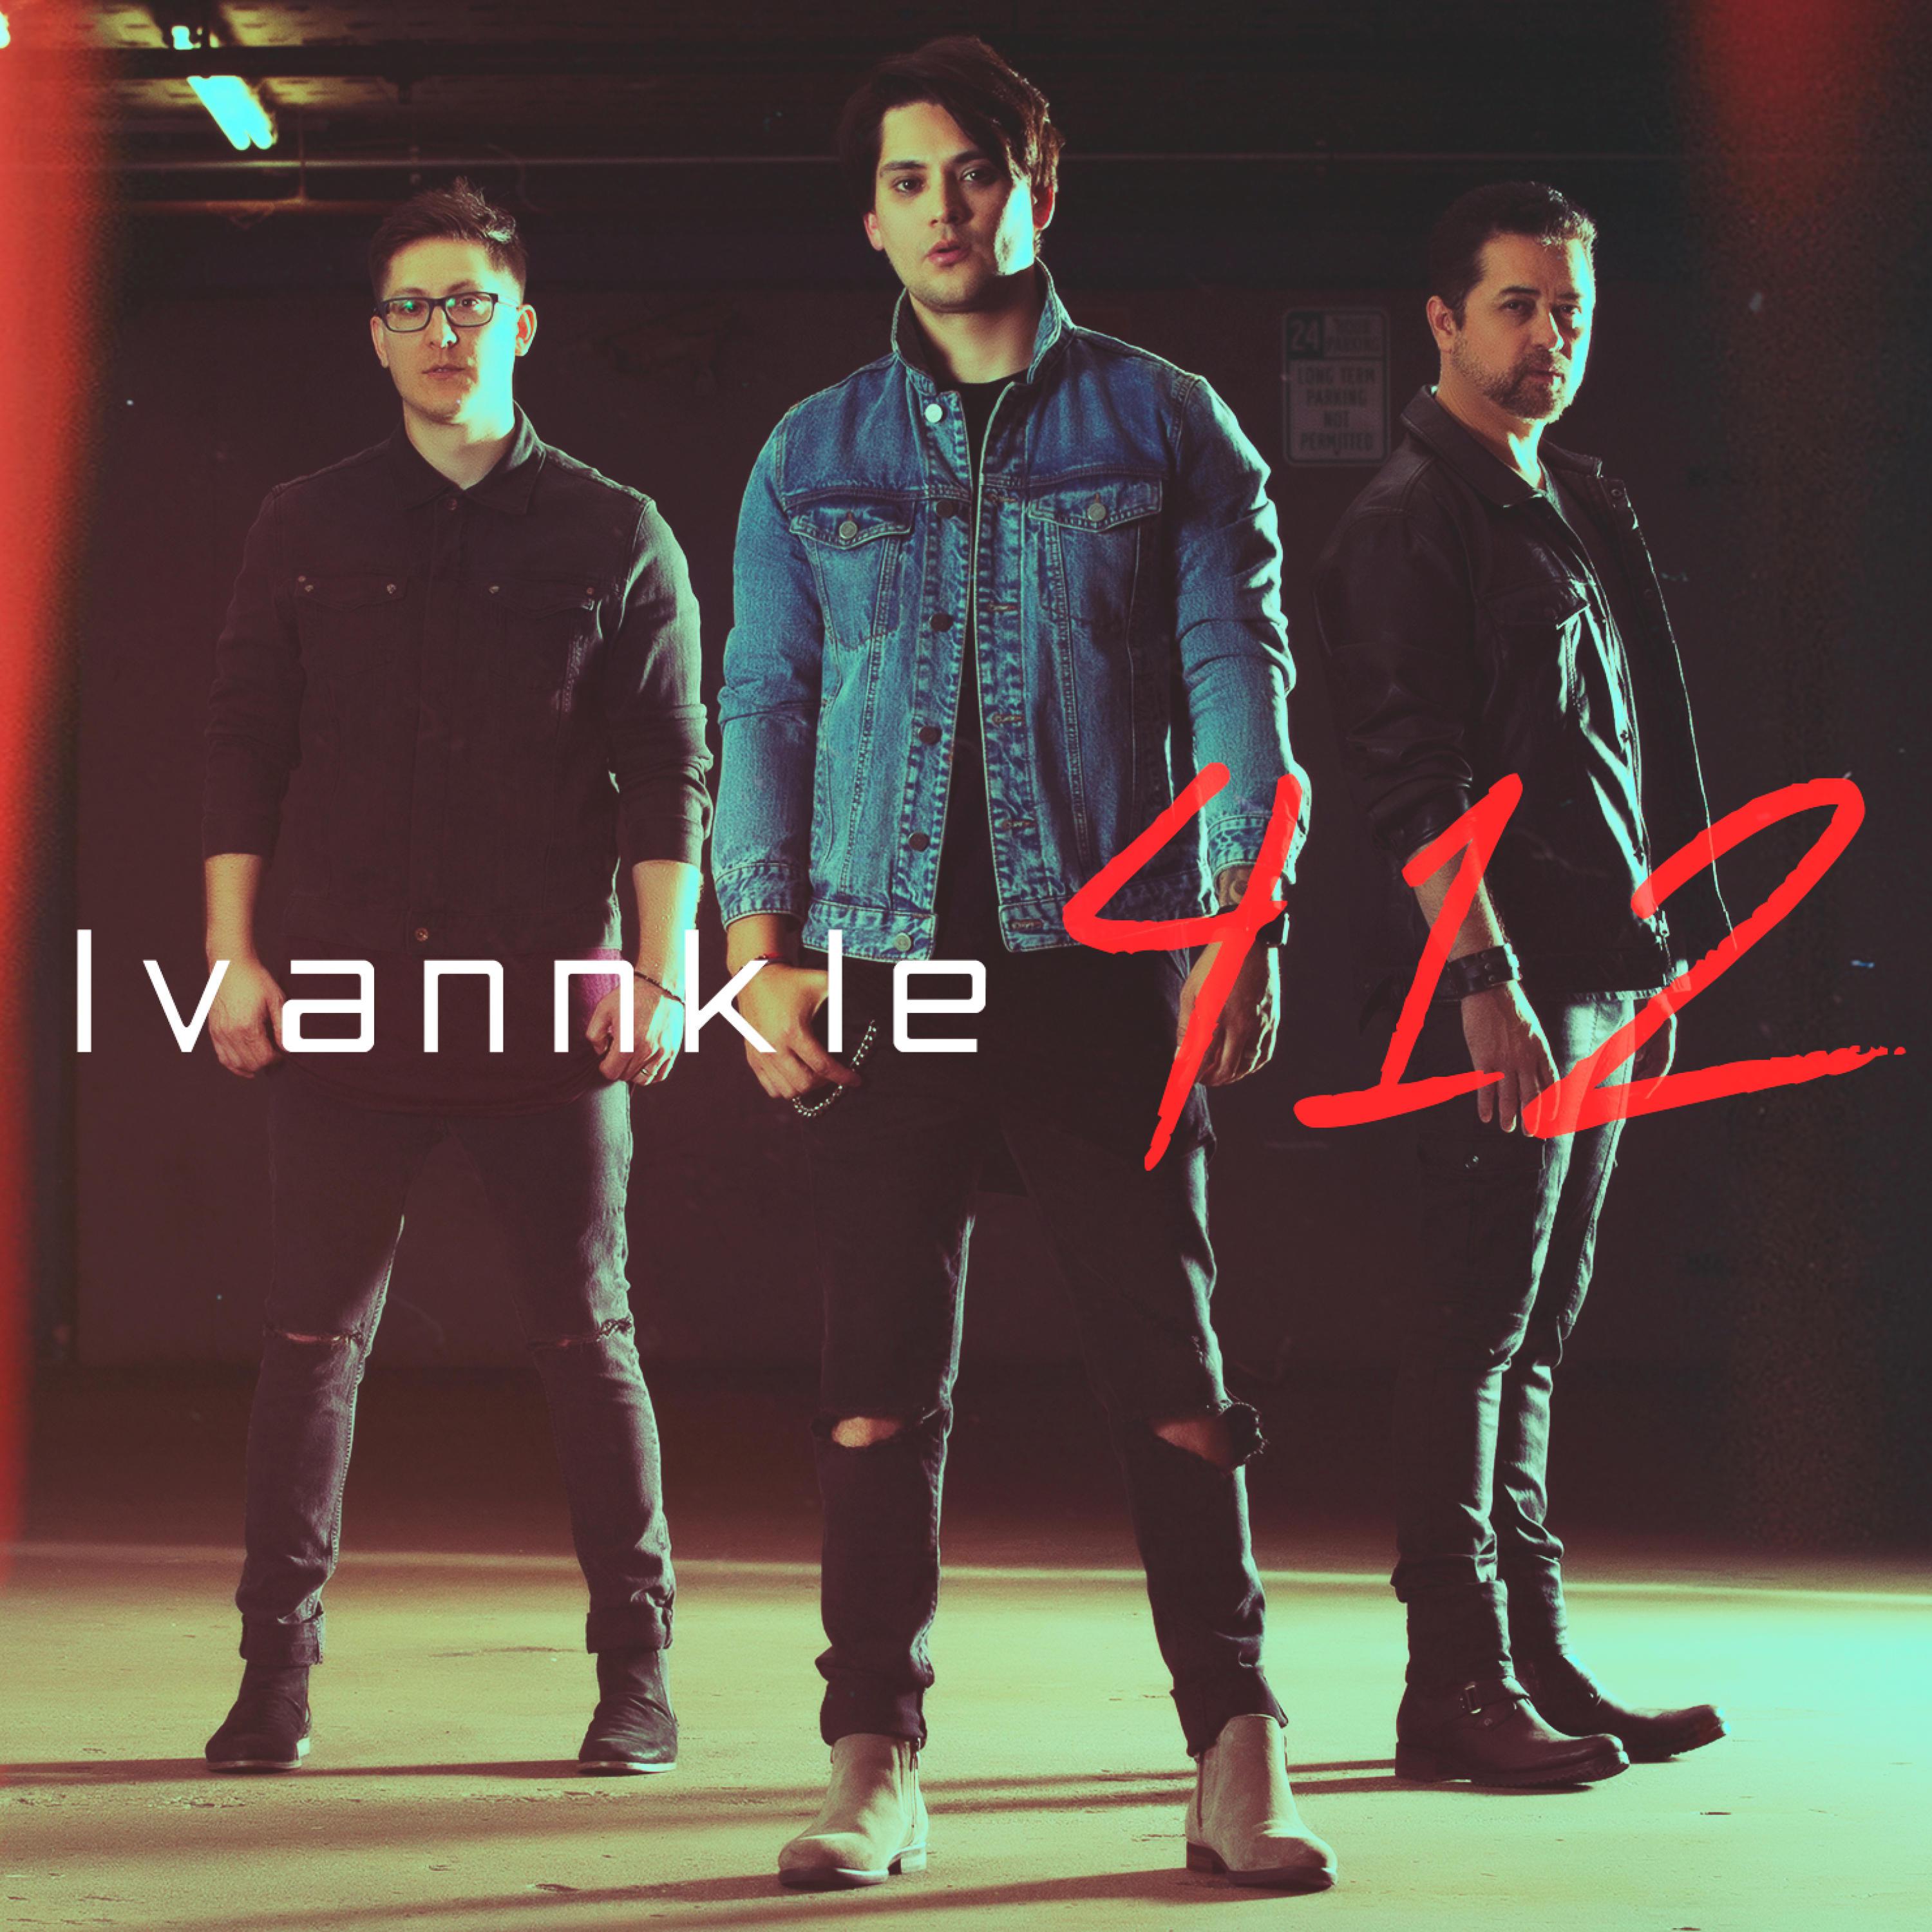 Ivannkie - Portarse mal